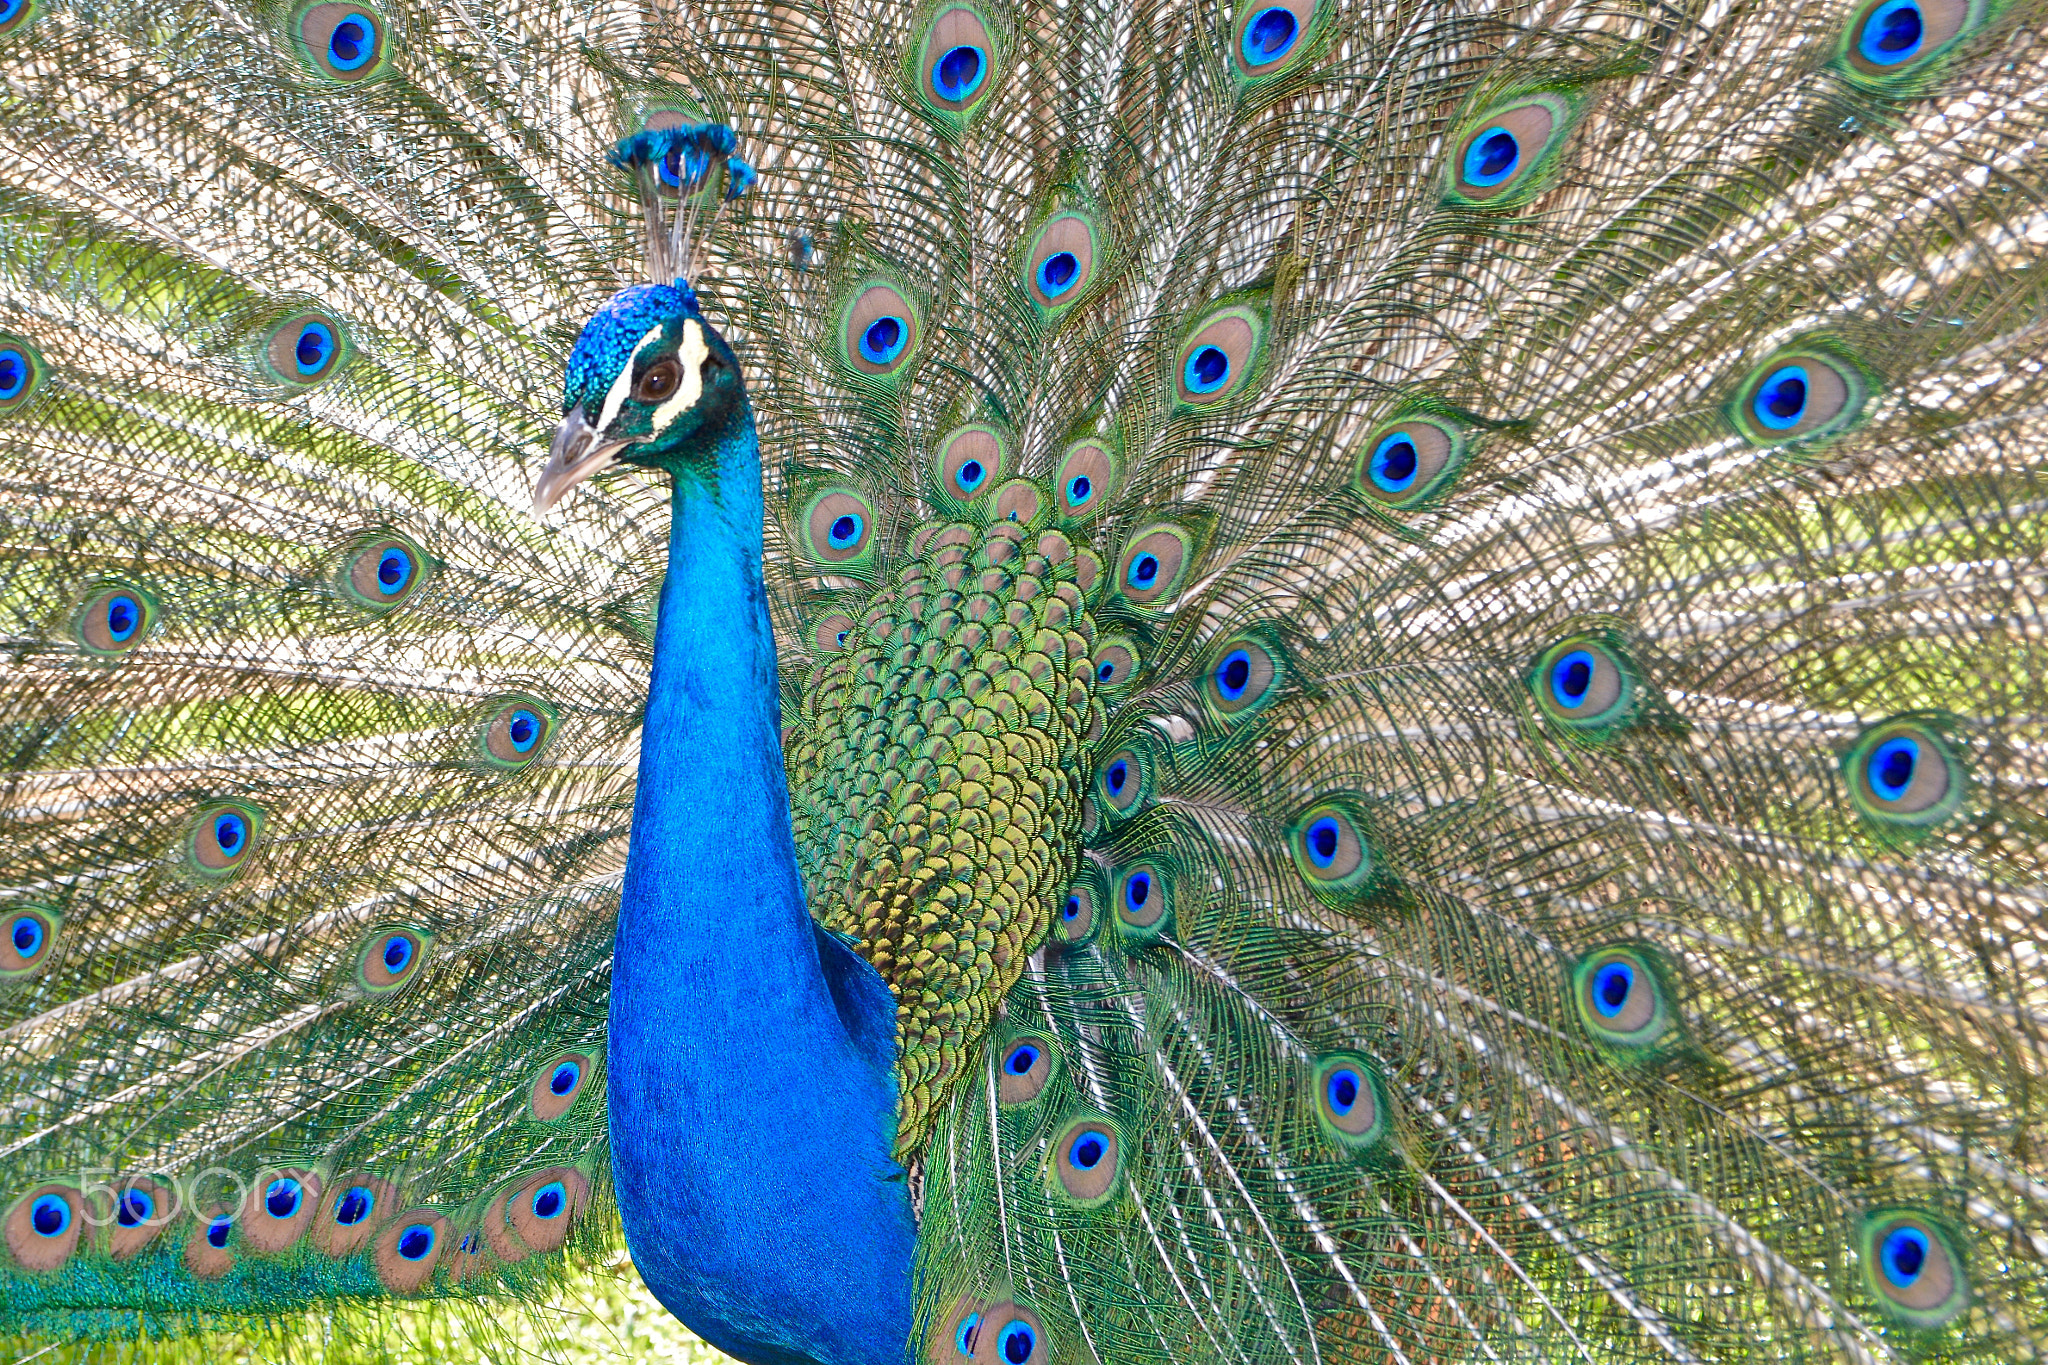 Peacock on display